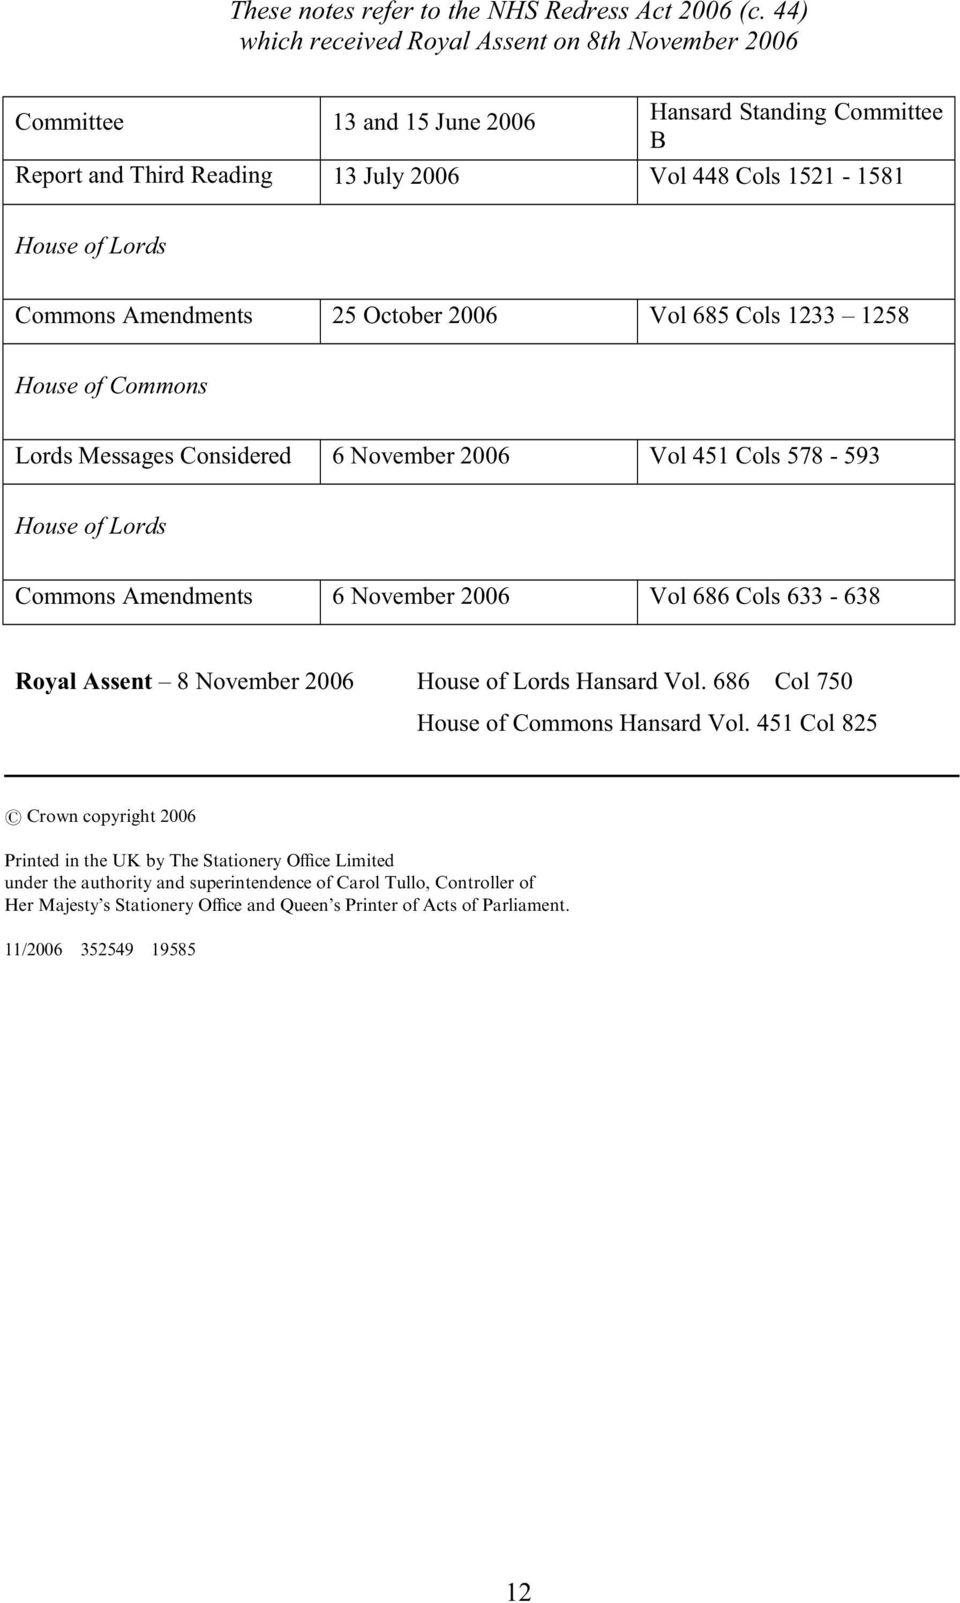 633-638 Royal Assent 8 November 2006 House of Lords Hansard Vol. 686 Col 750 House of Commons Hansard Vol. 451 Col 825?